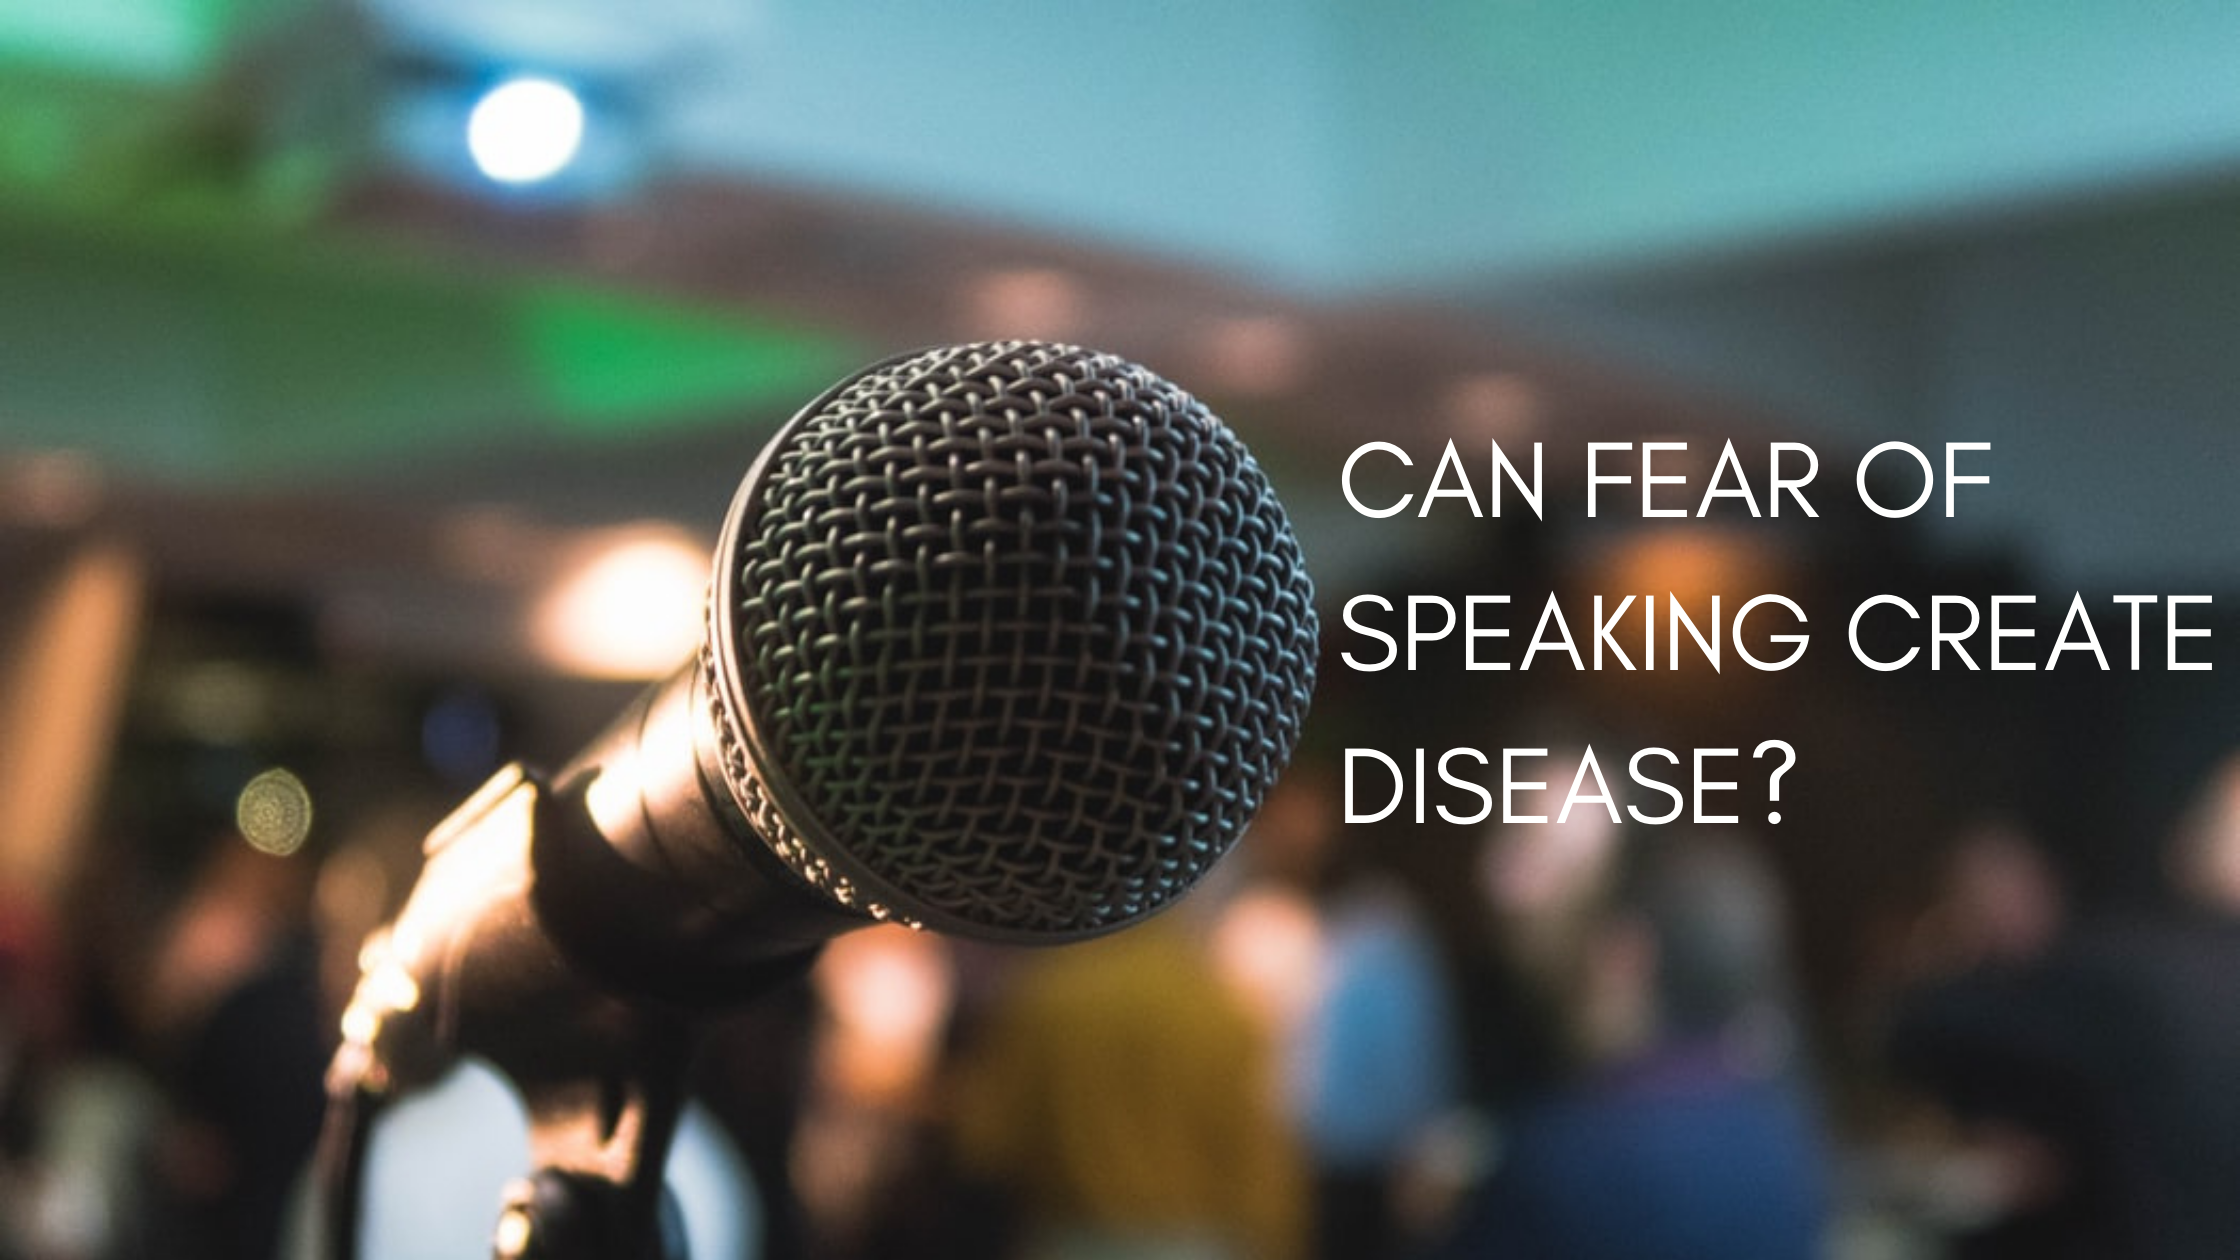 Can fear of speaking create disease?